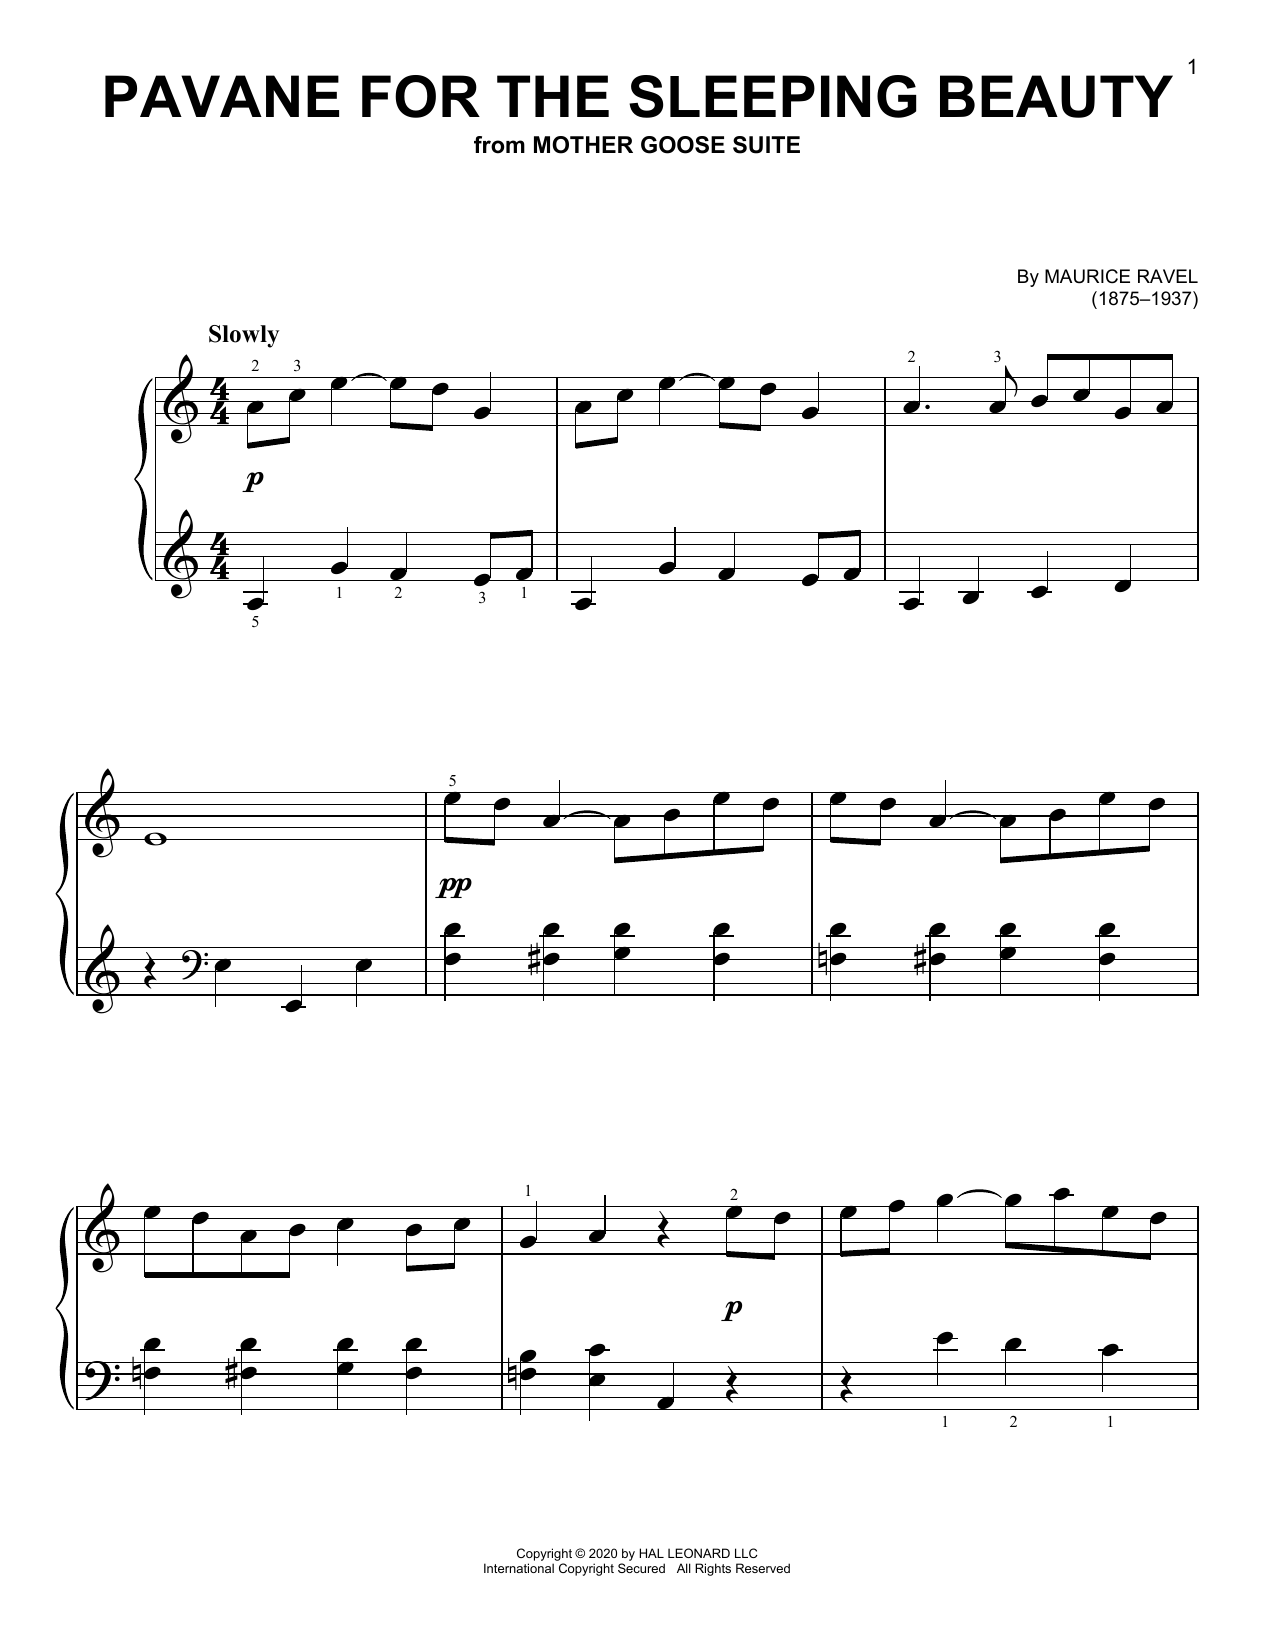 Maurice Ravel Pavanne De La Belle Au Bois Dormant Sheet Music Notes & Chords for Easy Piano - Download or Print PDF